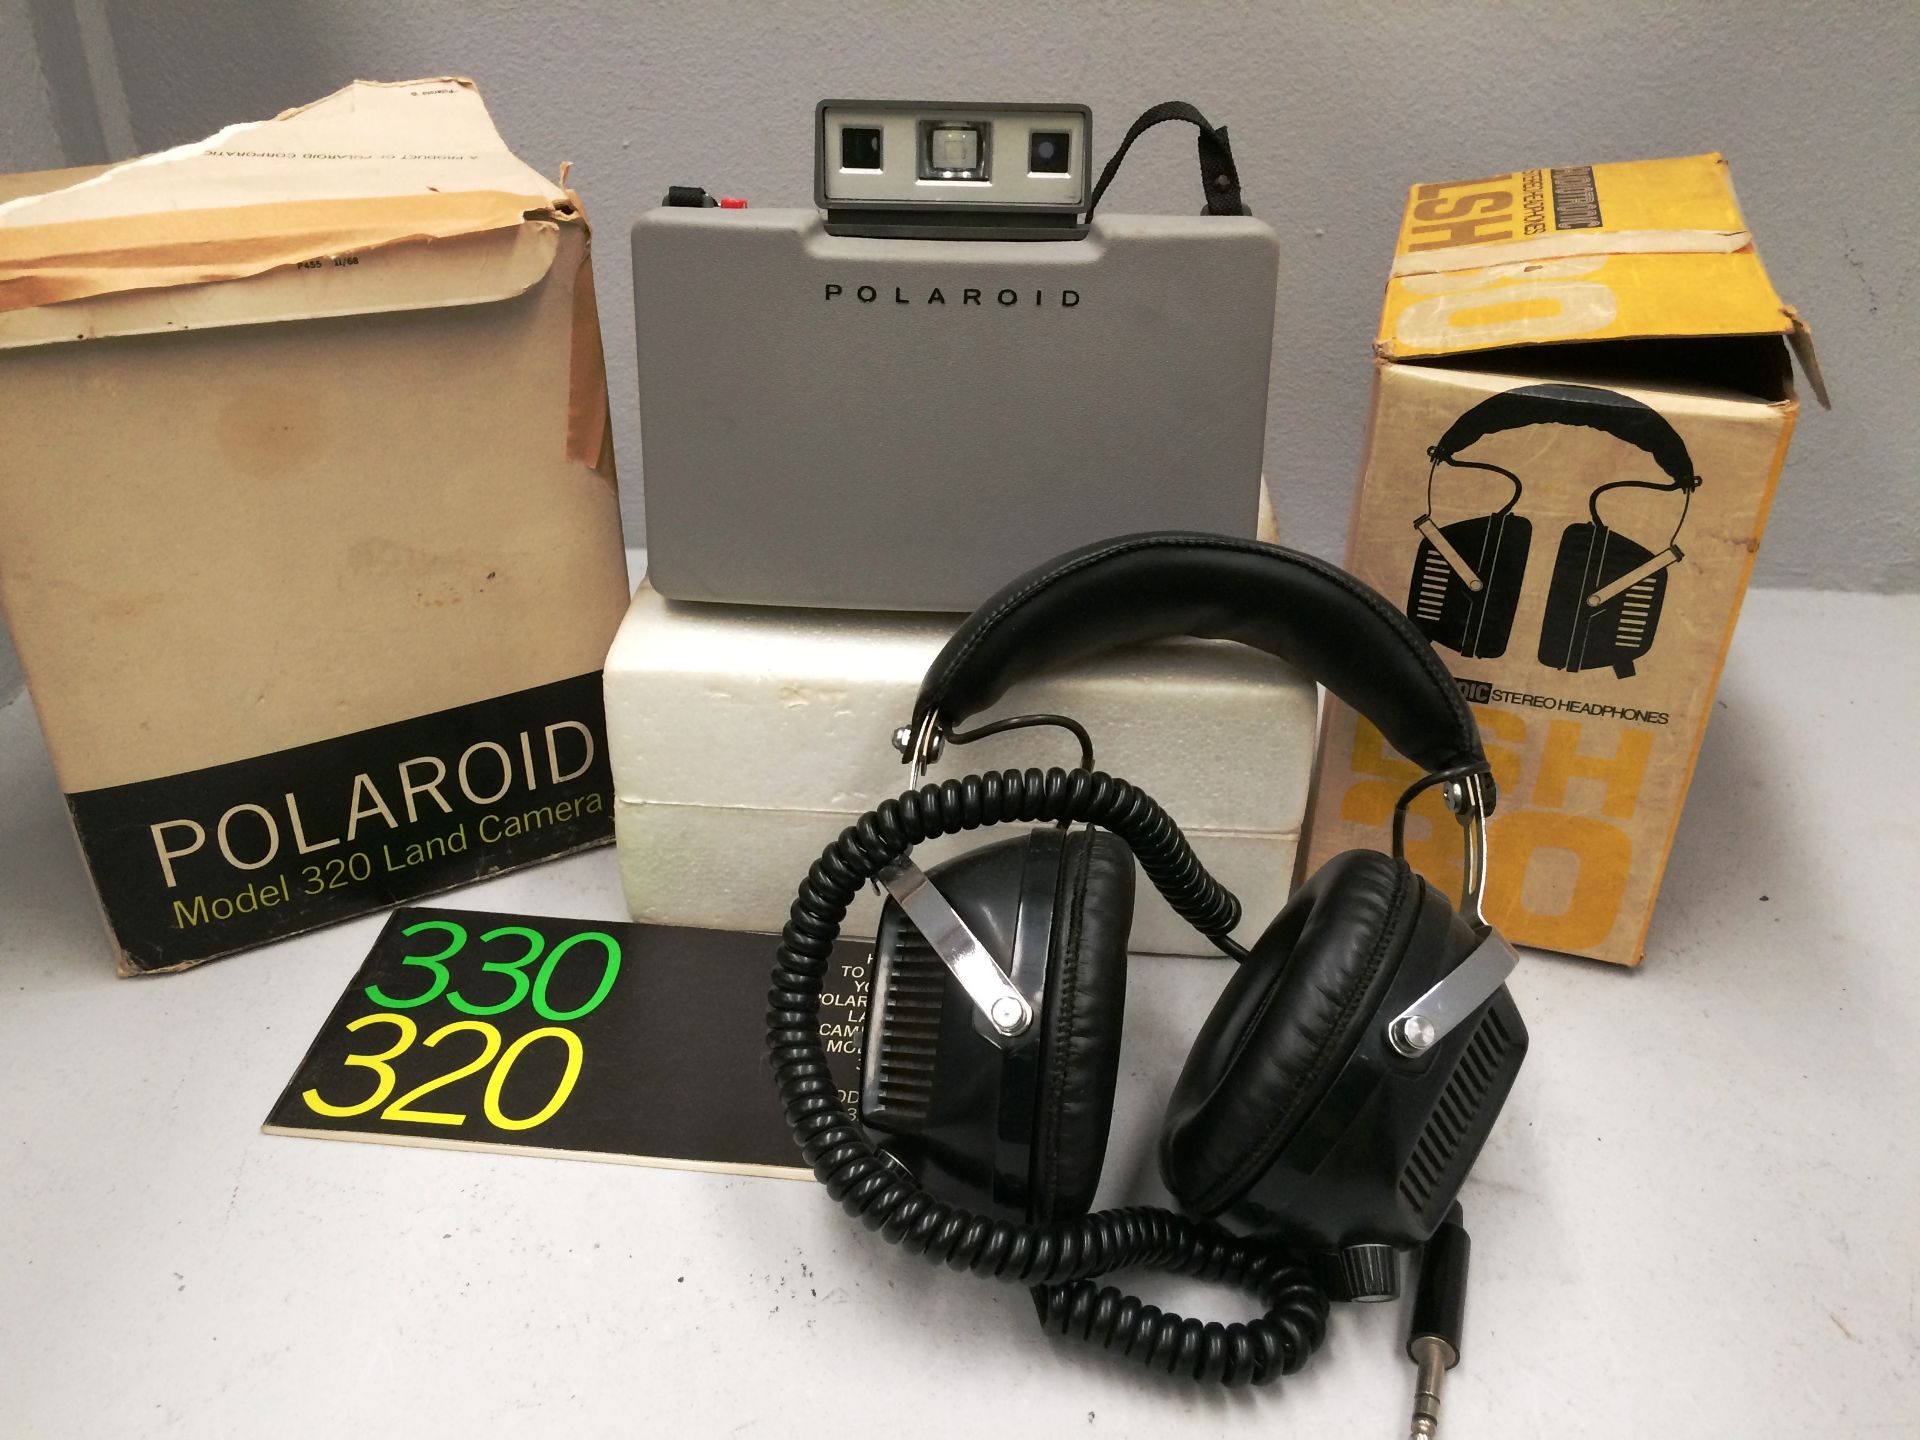 2 x items - Polaroid 320 land camera and Audiotronic LSH 30 headphones